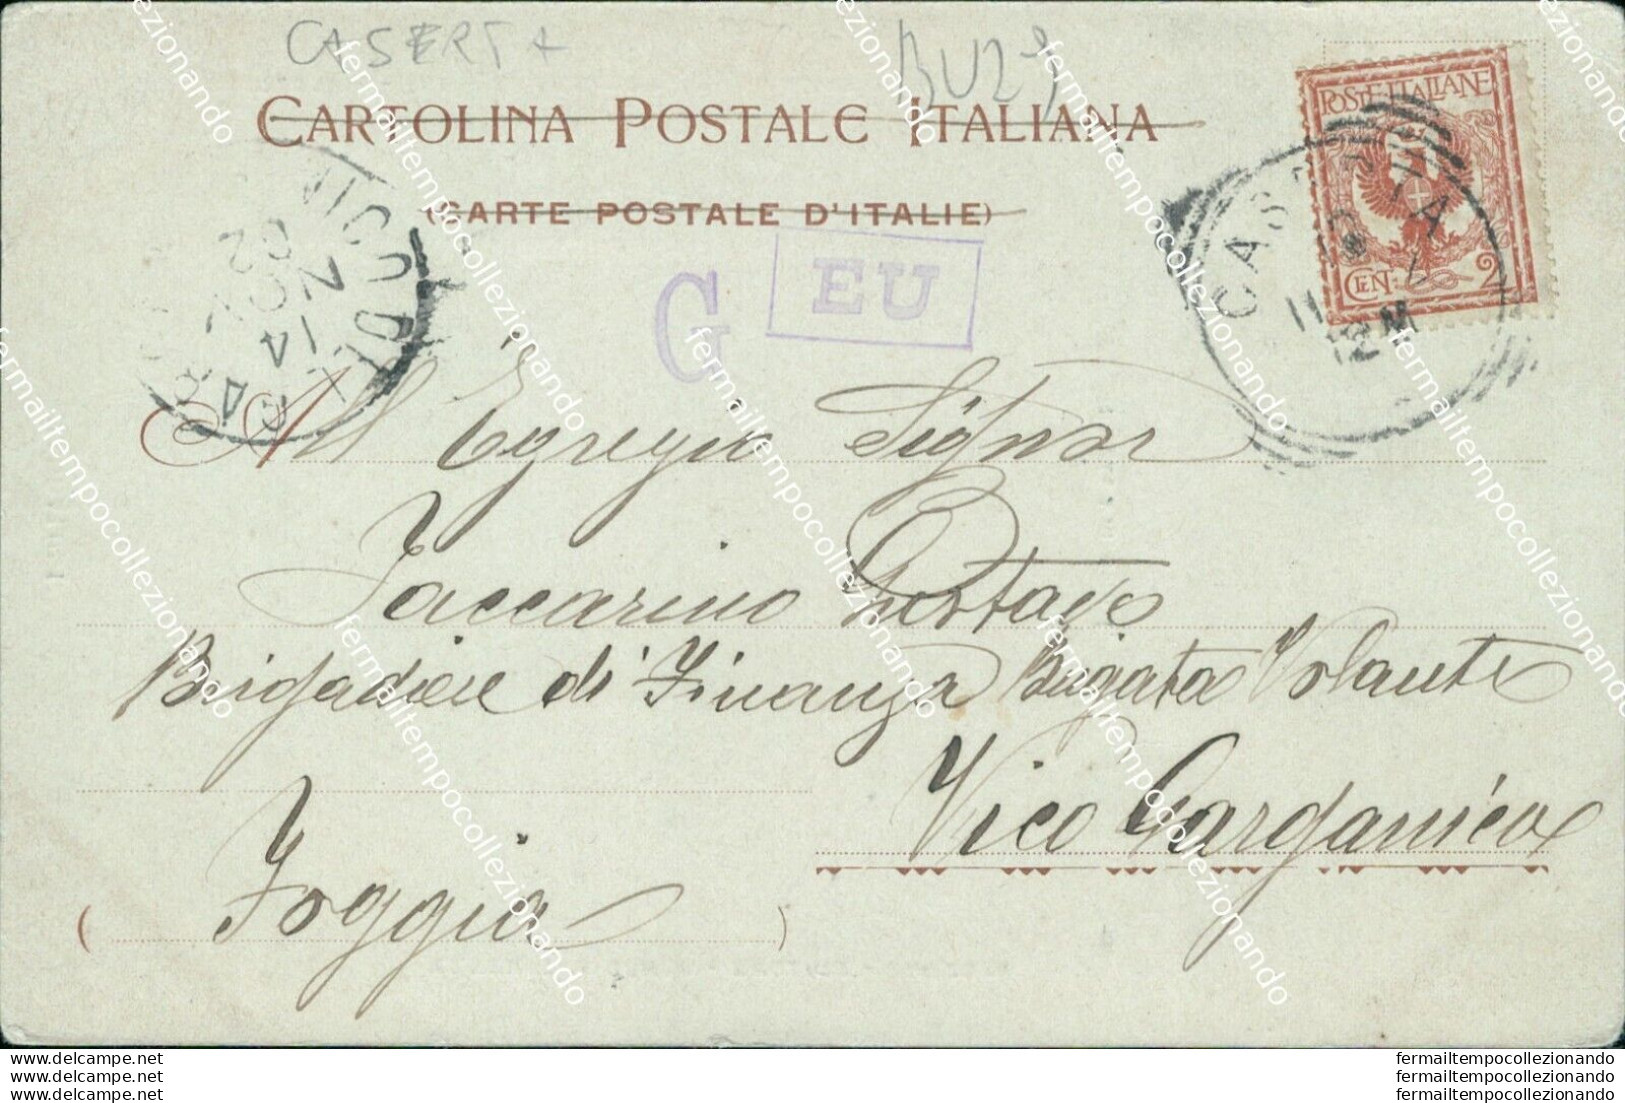 Bu29 Cartolina Maddaloni Piazza Umberto I 1902 Provincia Di Caserta Campania - Caserta